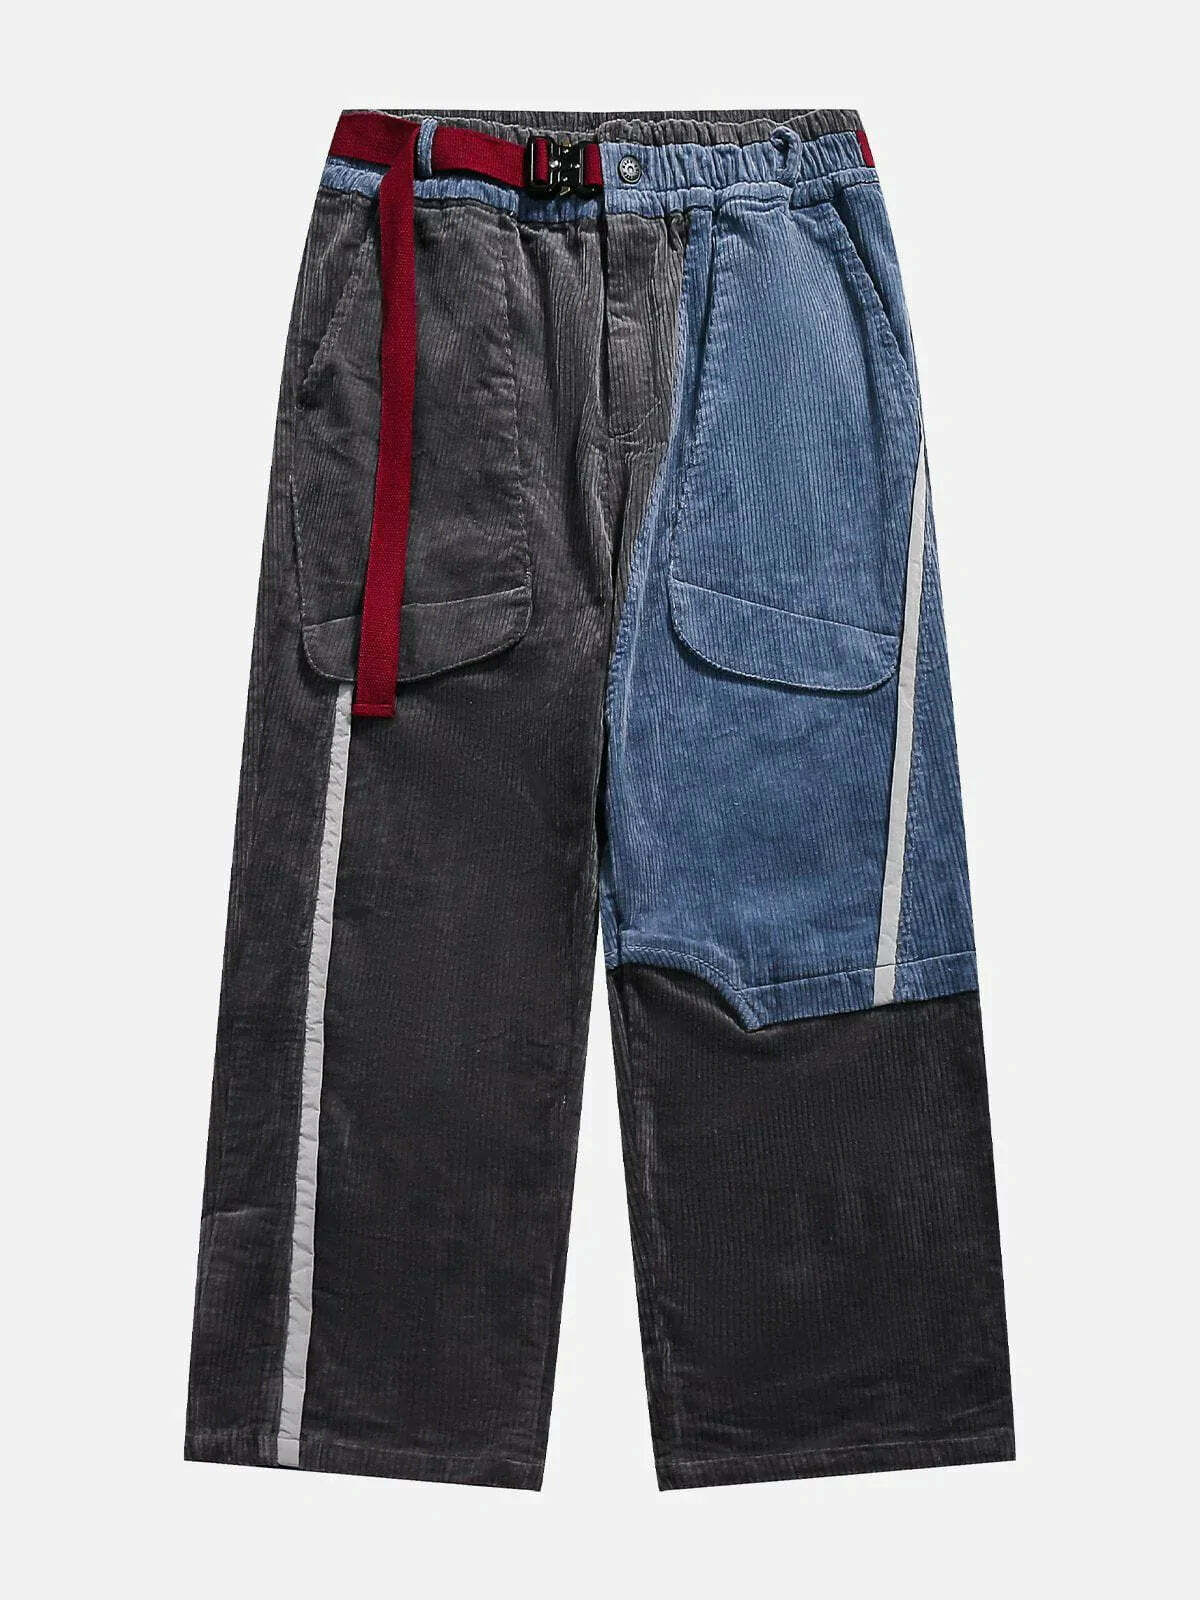 wideleg patchwork corduroy pants retro & edgy streetwear 5578